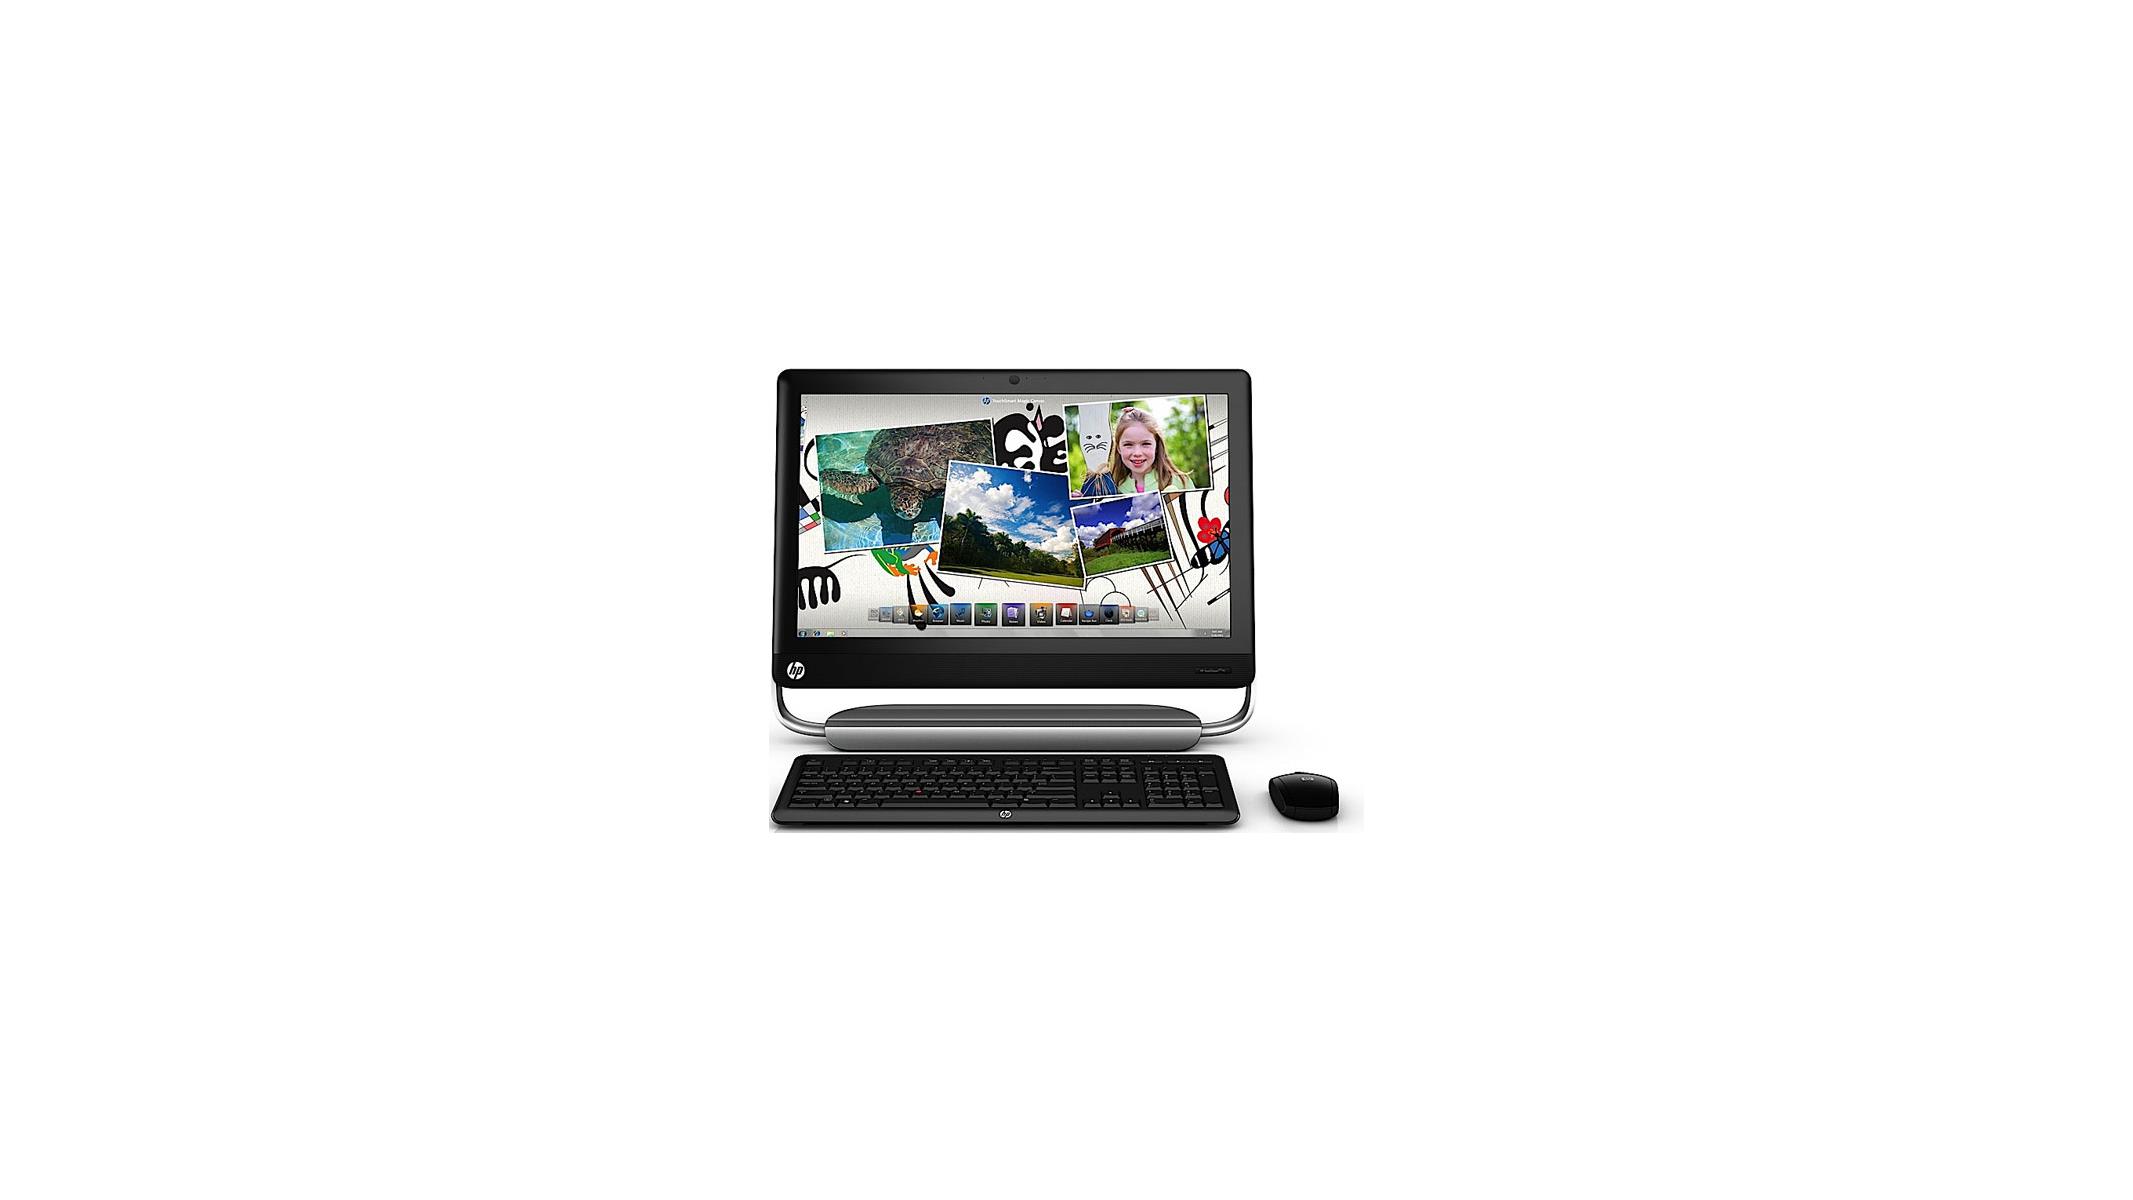 TouchSmart 520-1100 Desktop PC series